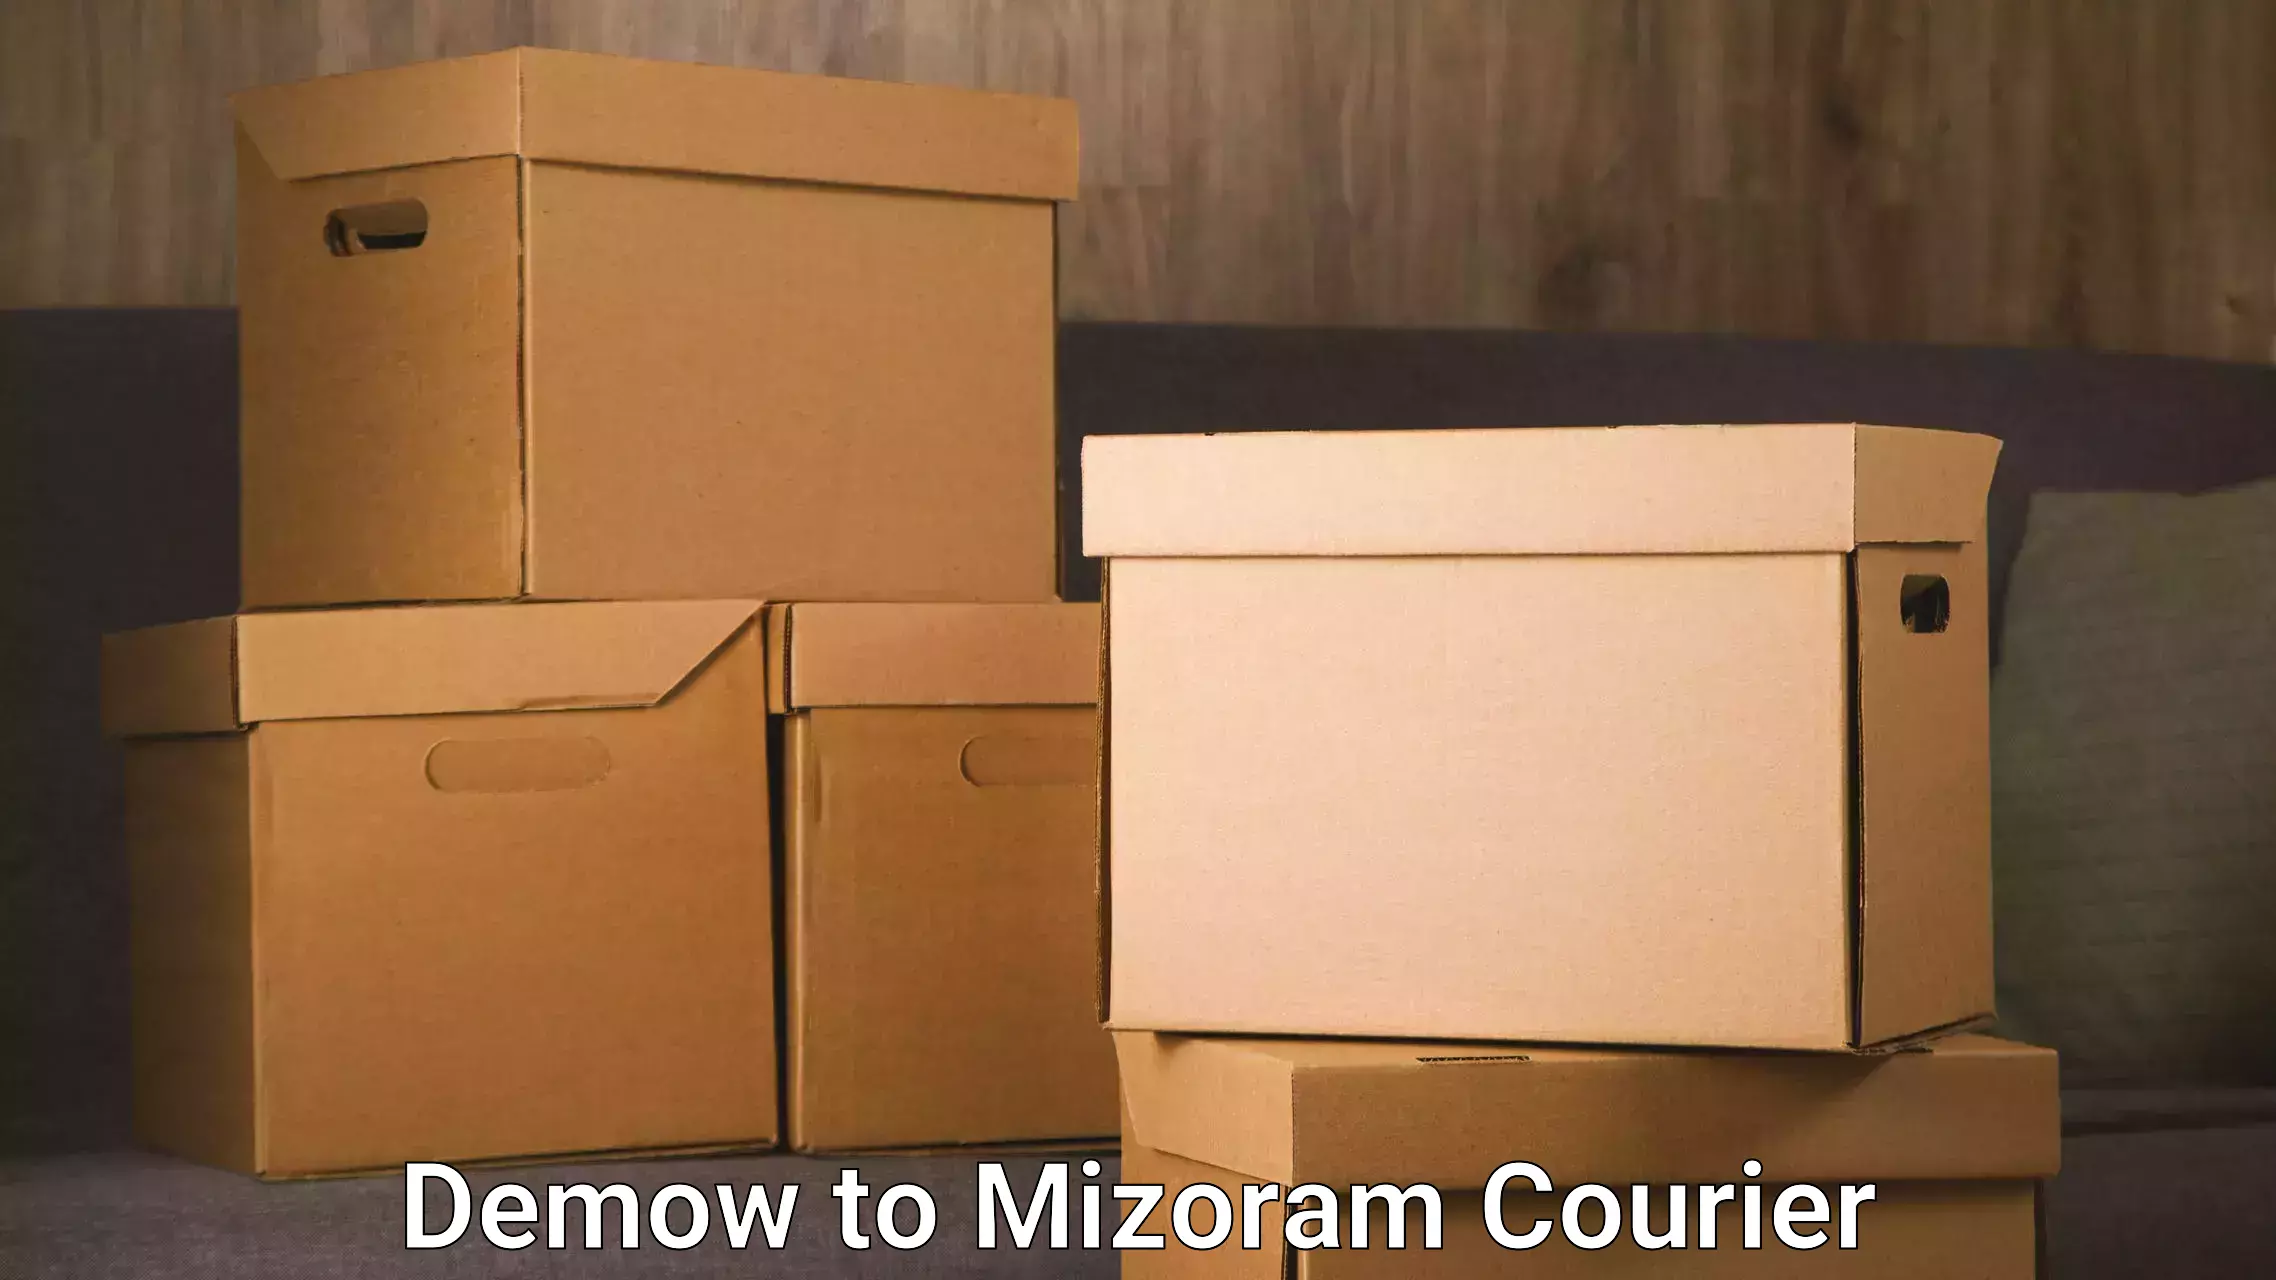 International courier networks Demow to Mizoram